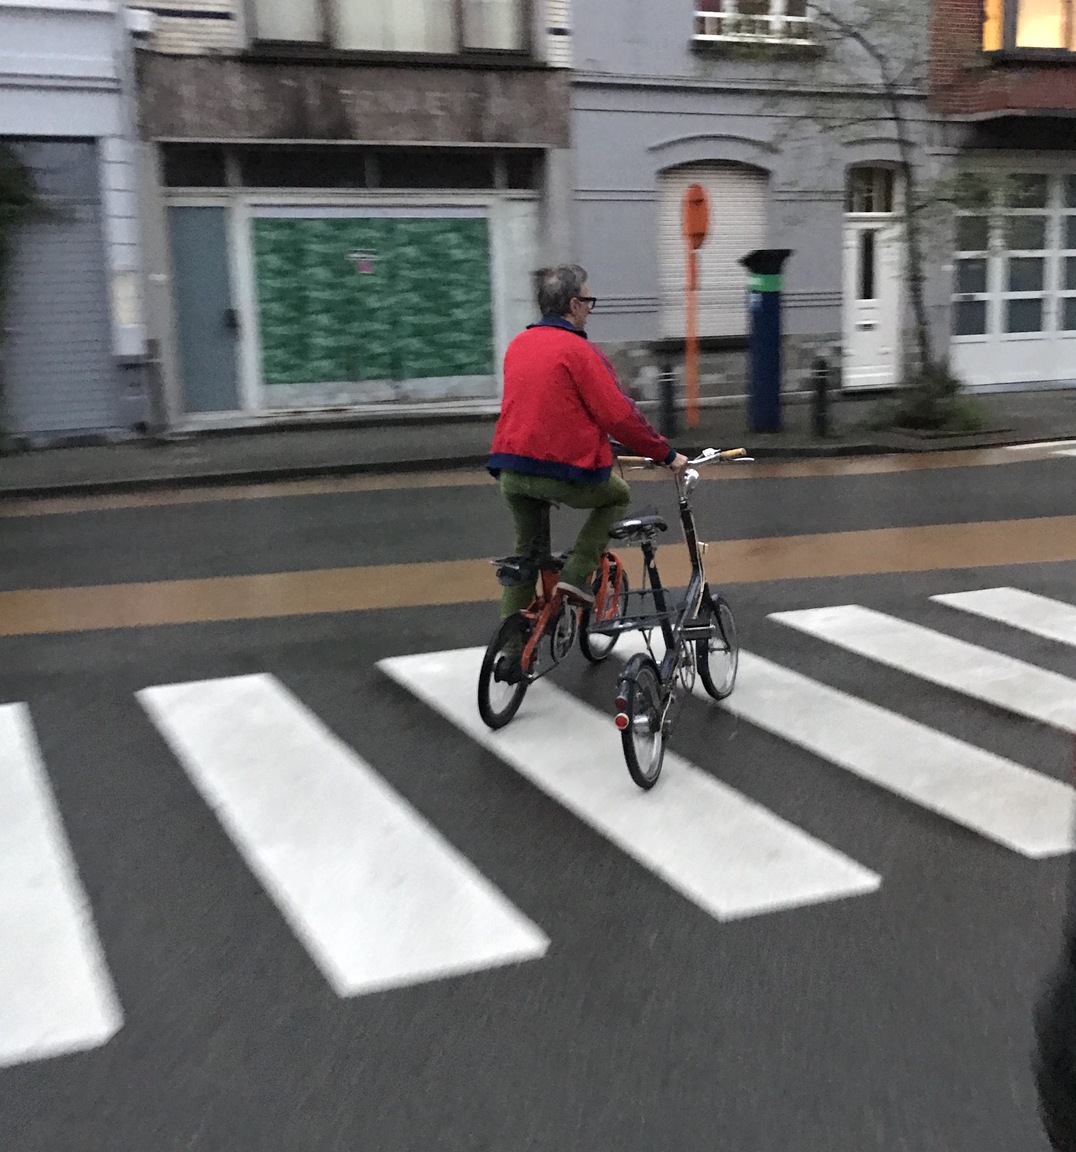 Ghost Ride, Gent, Belgium, 2018.
Photo: Amy Franceschini
